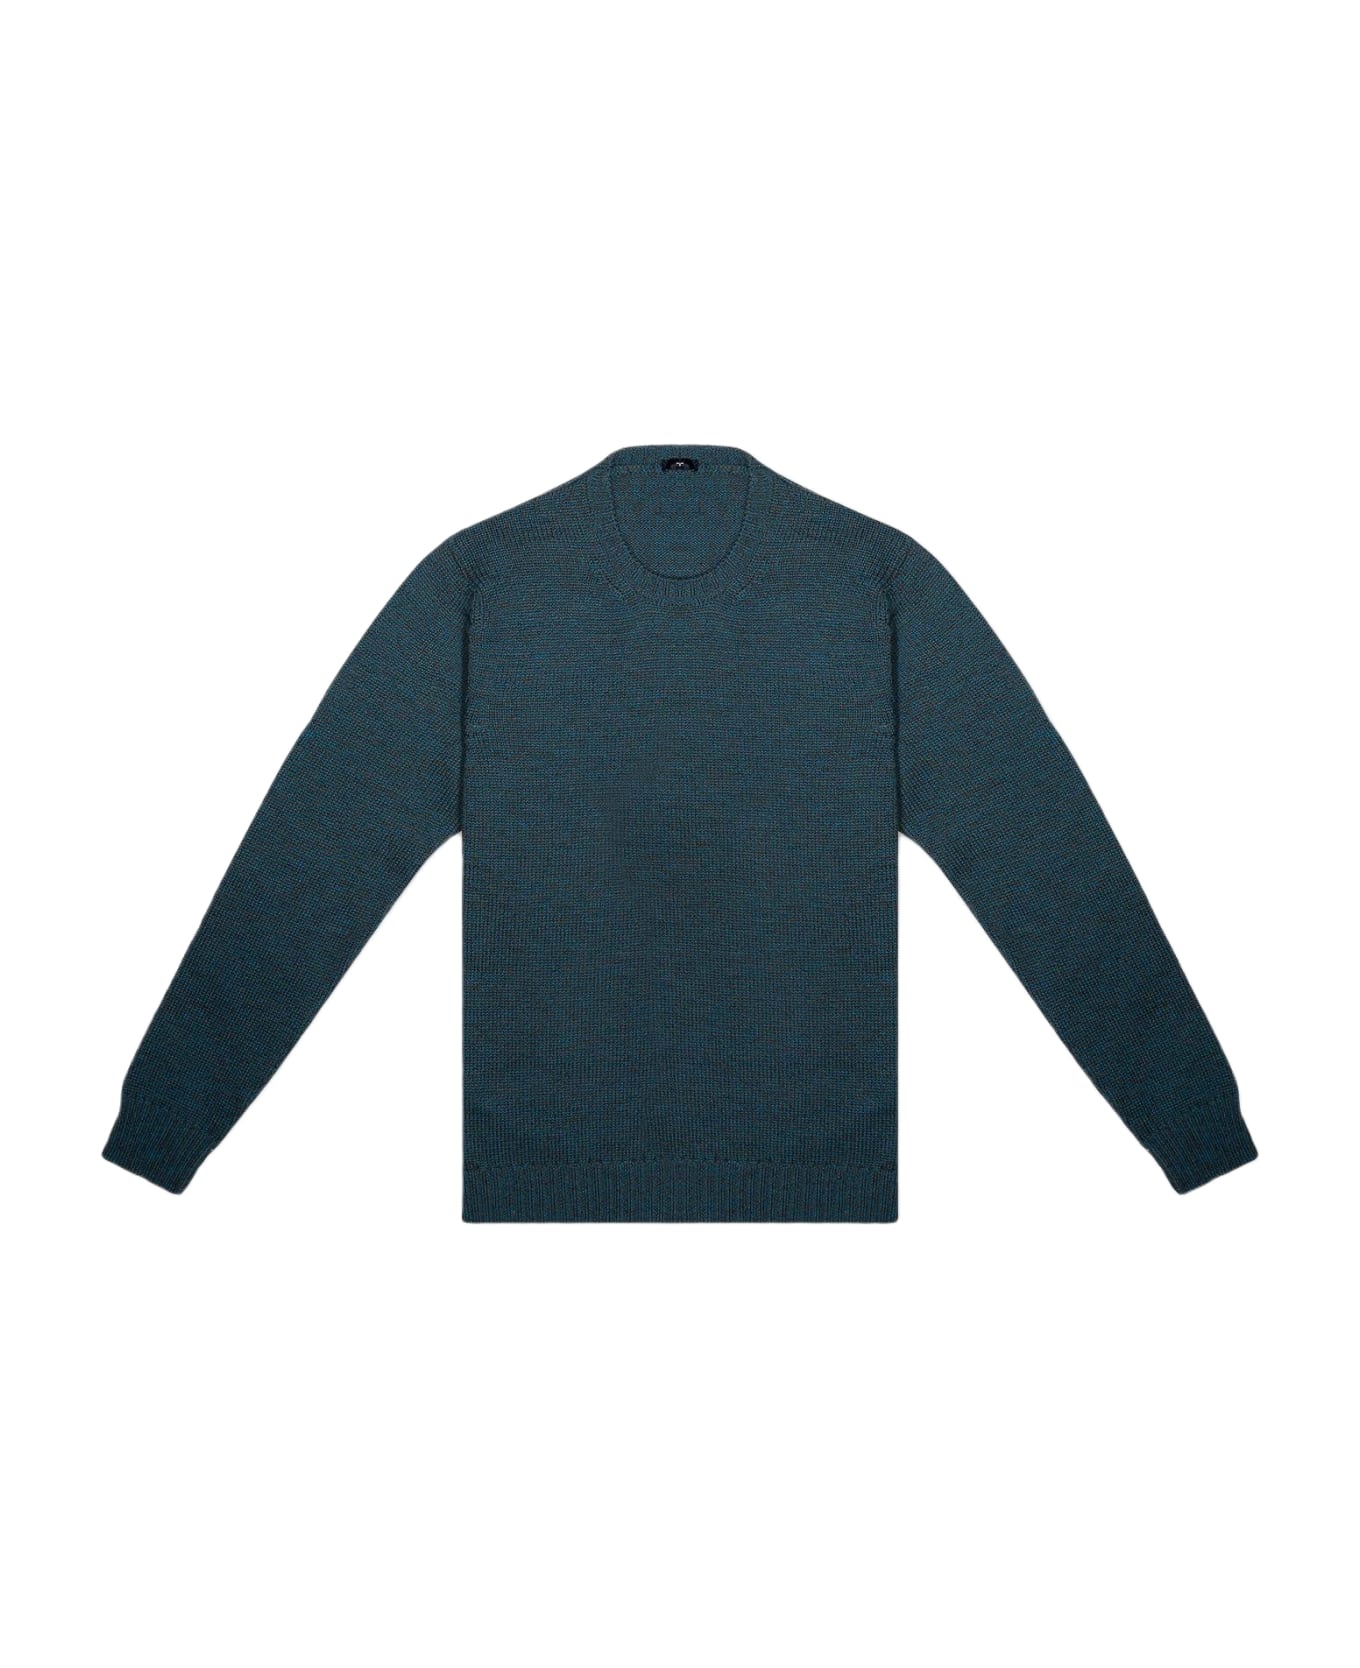 Larusmiani Crew Neck Sweater 'la Cabane' Sweater - Teal